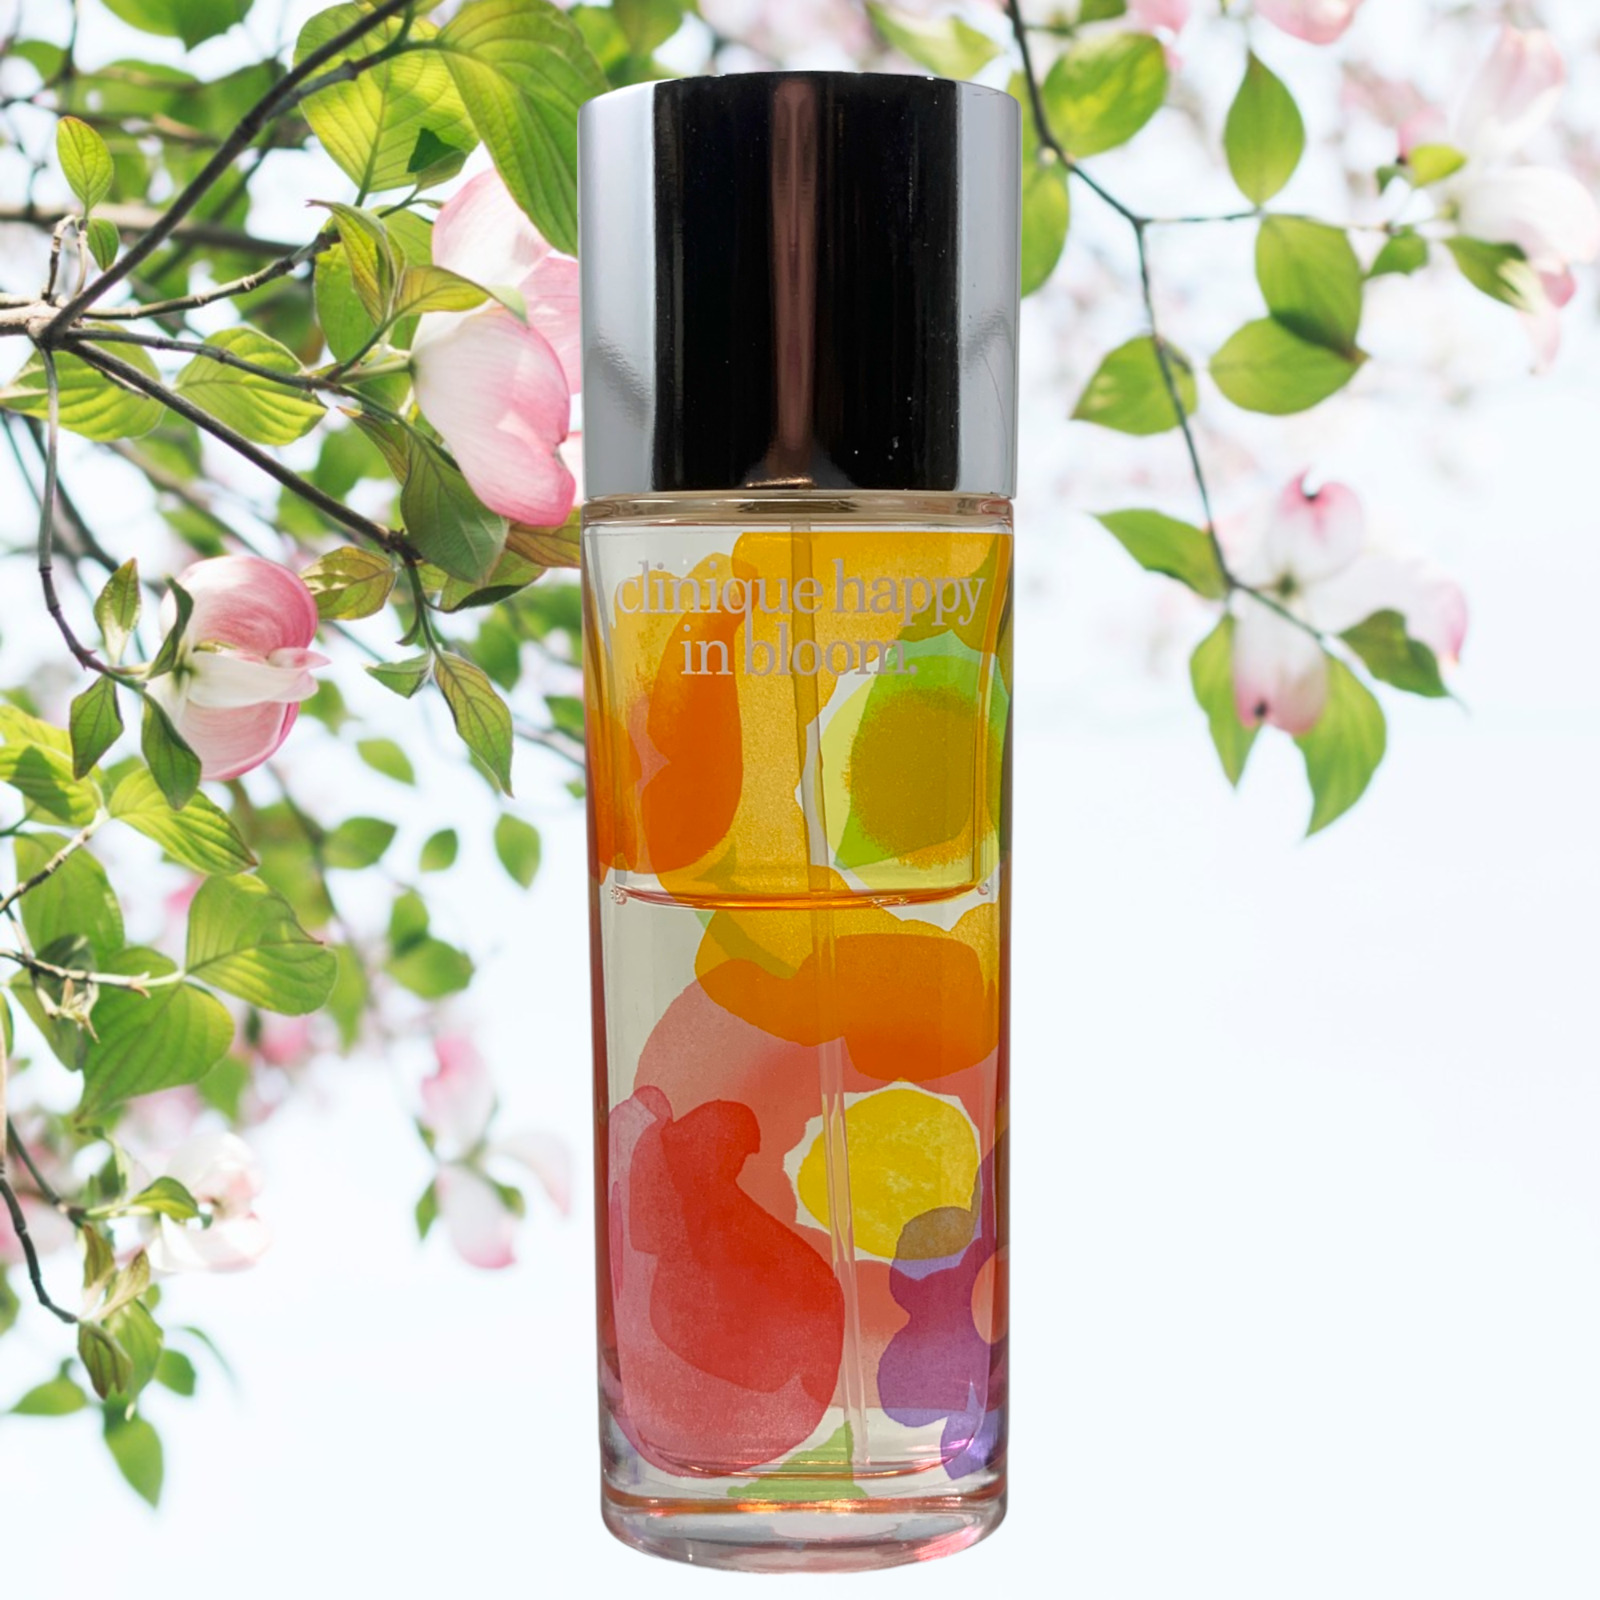 Clinique Happy in Bloom 50 mL 1.7 fl oz Perfume Parfum Spray 60% Full Original